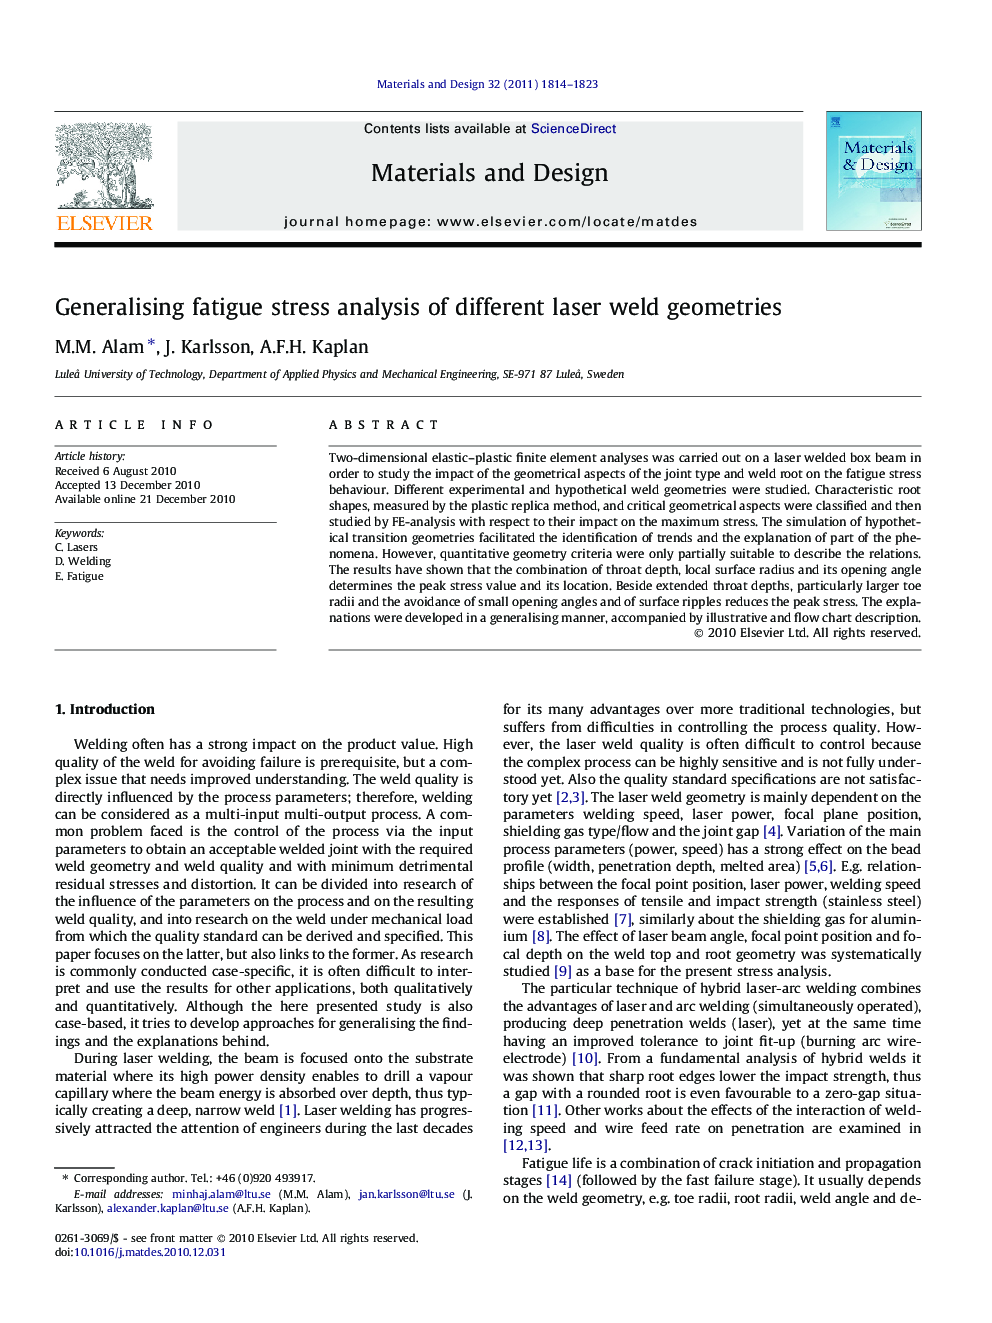 Generalising fatigue stress analysis of different laser weld geometries